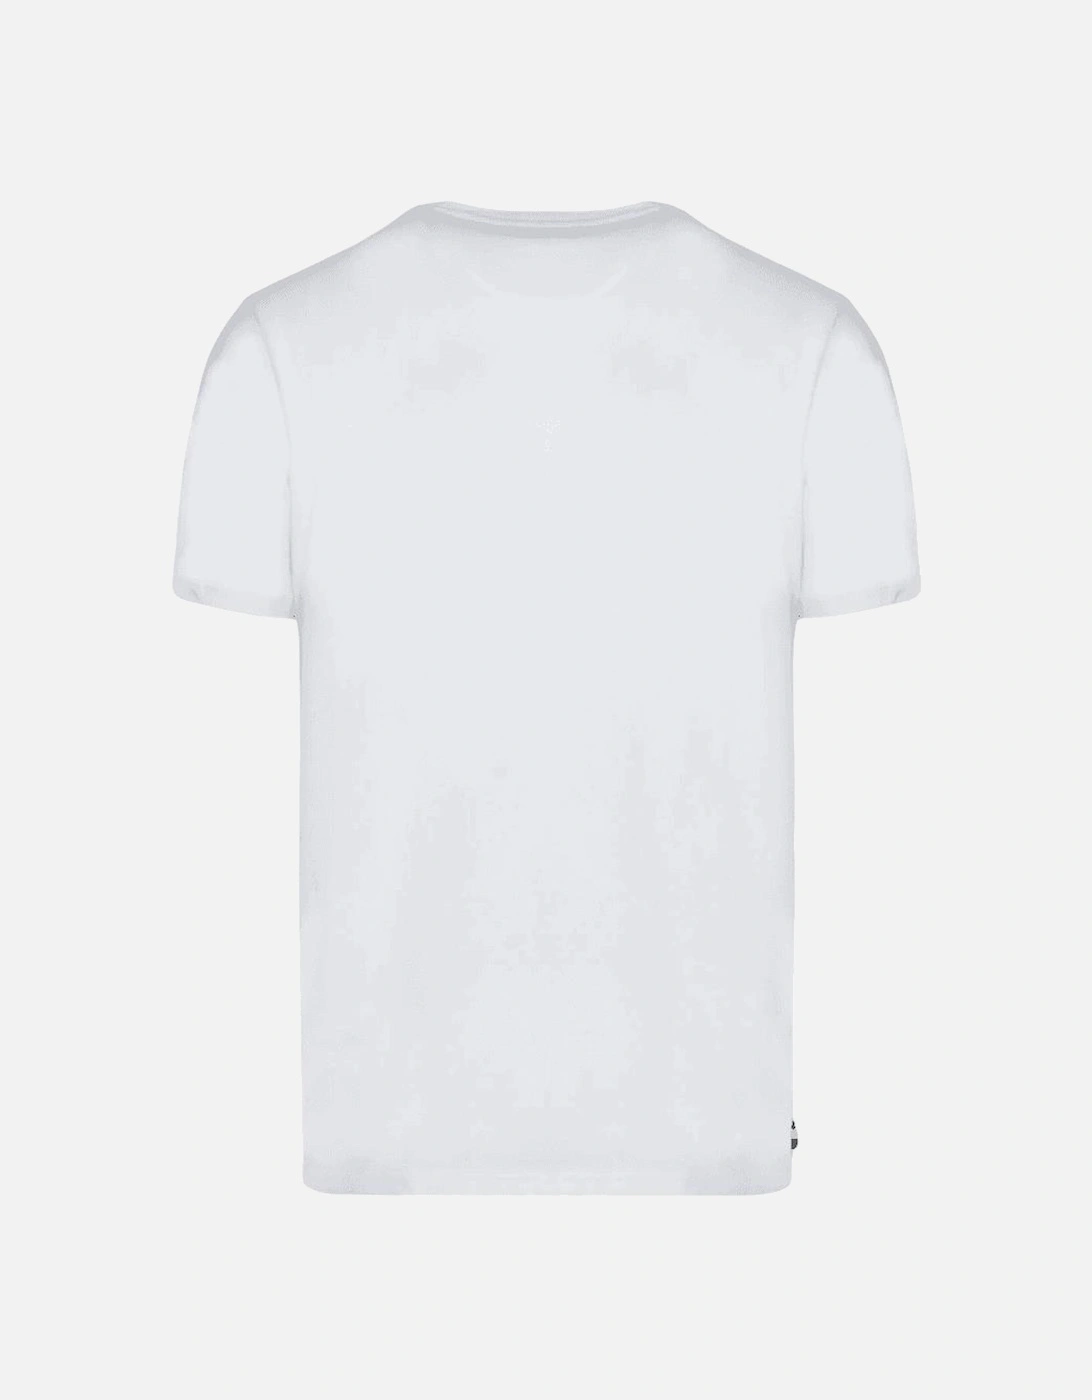 Cotton Emblem Logo White T-Shirt